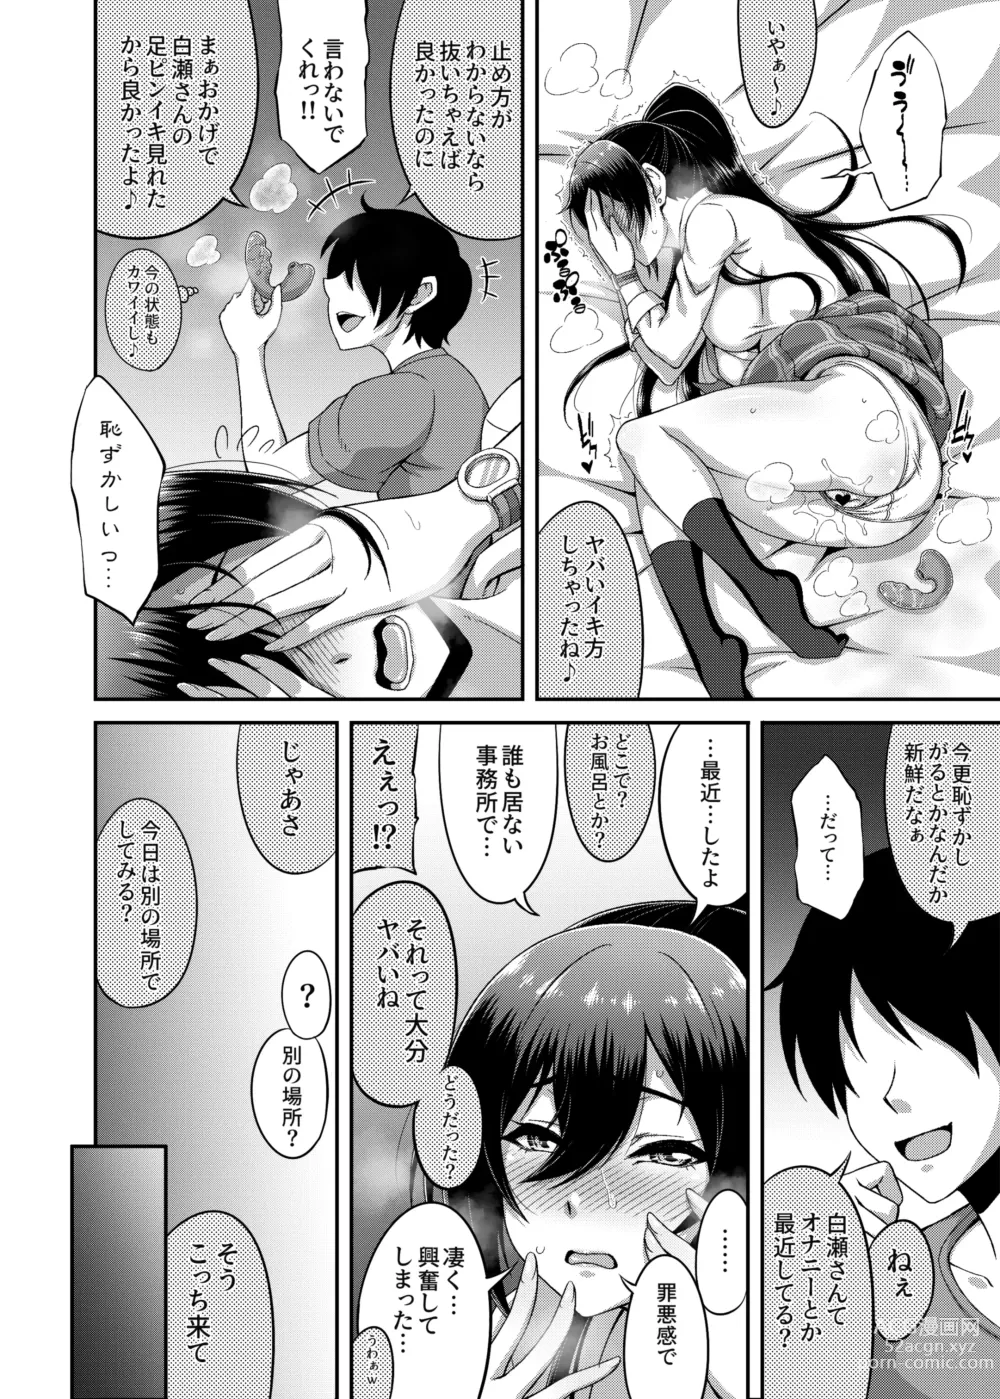 Page 7 of doujinshi SSR6